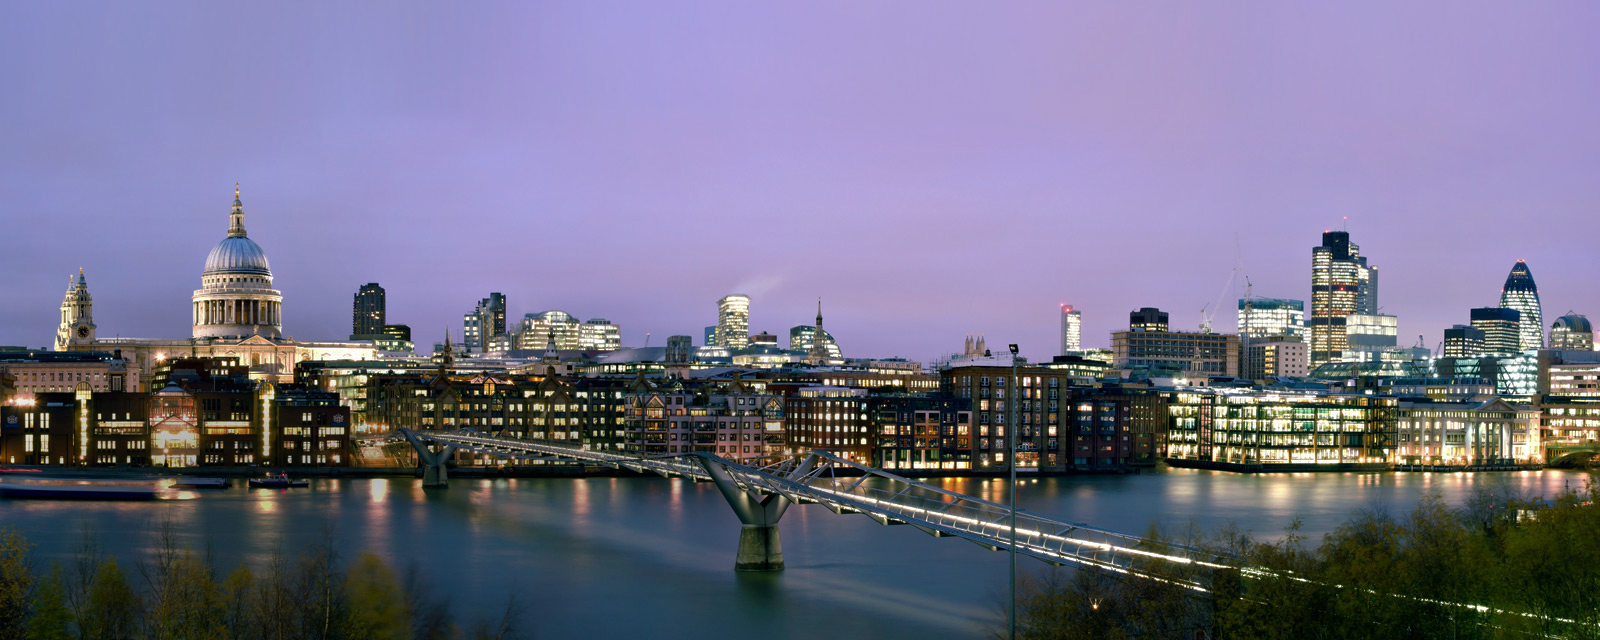 London cityscape, dawn